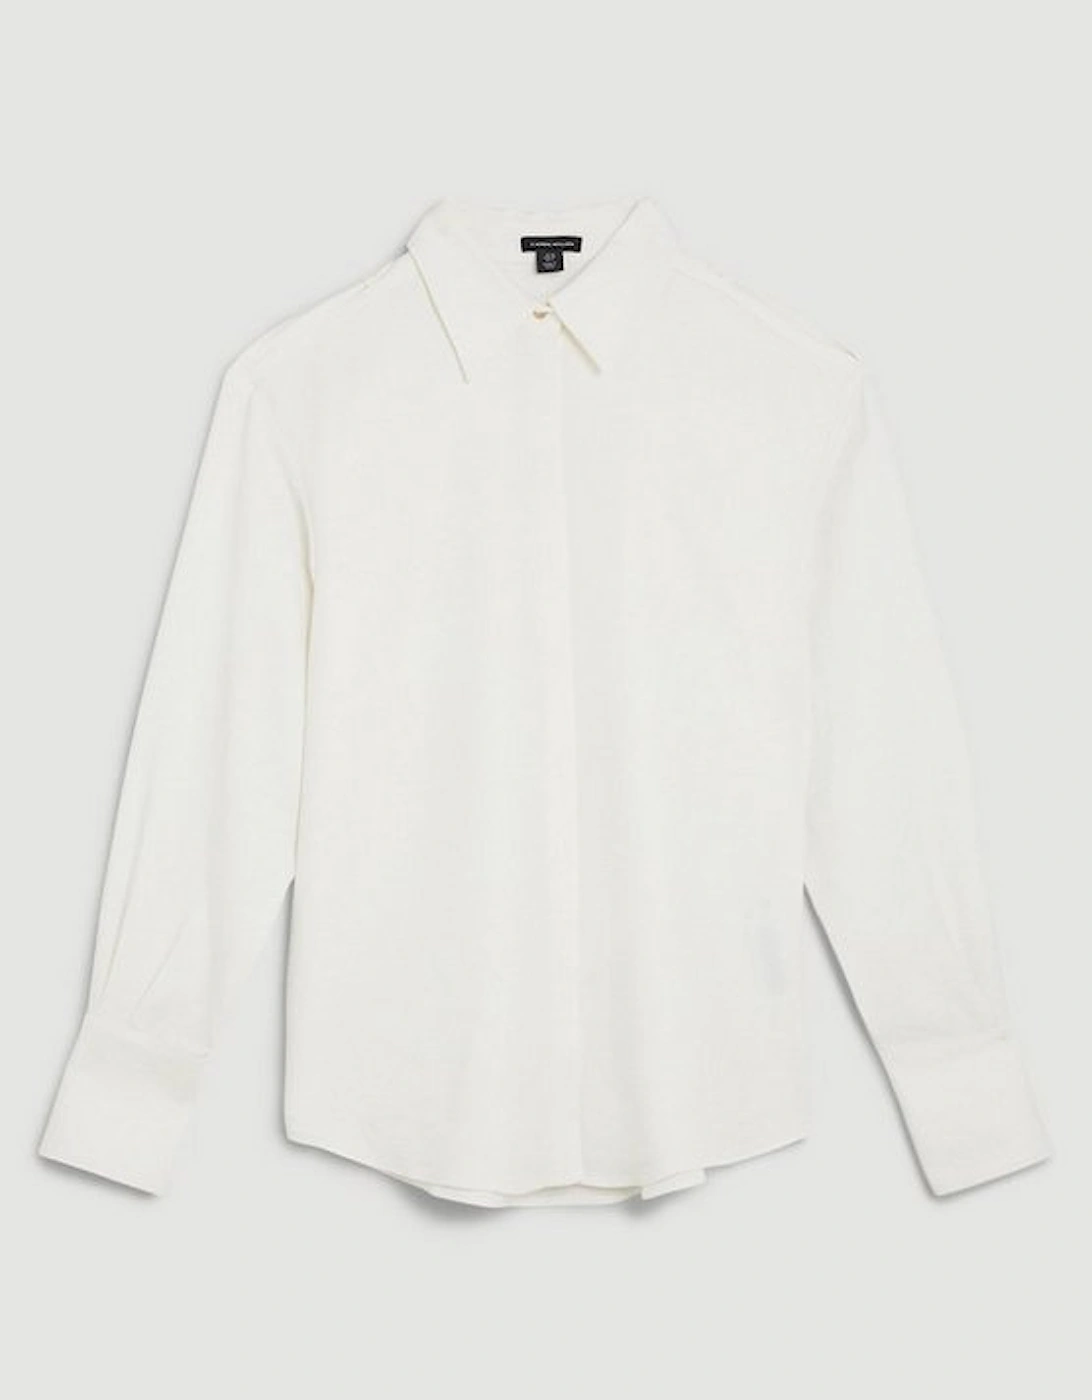 Premium Viscose Crepe Long Sleeve Collared Shirt